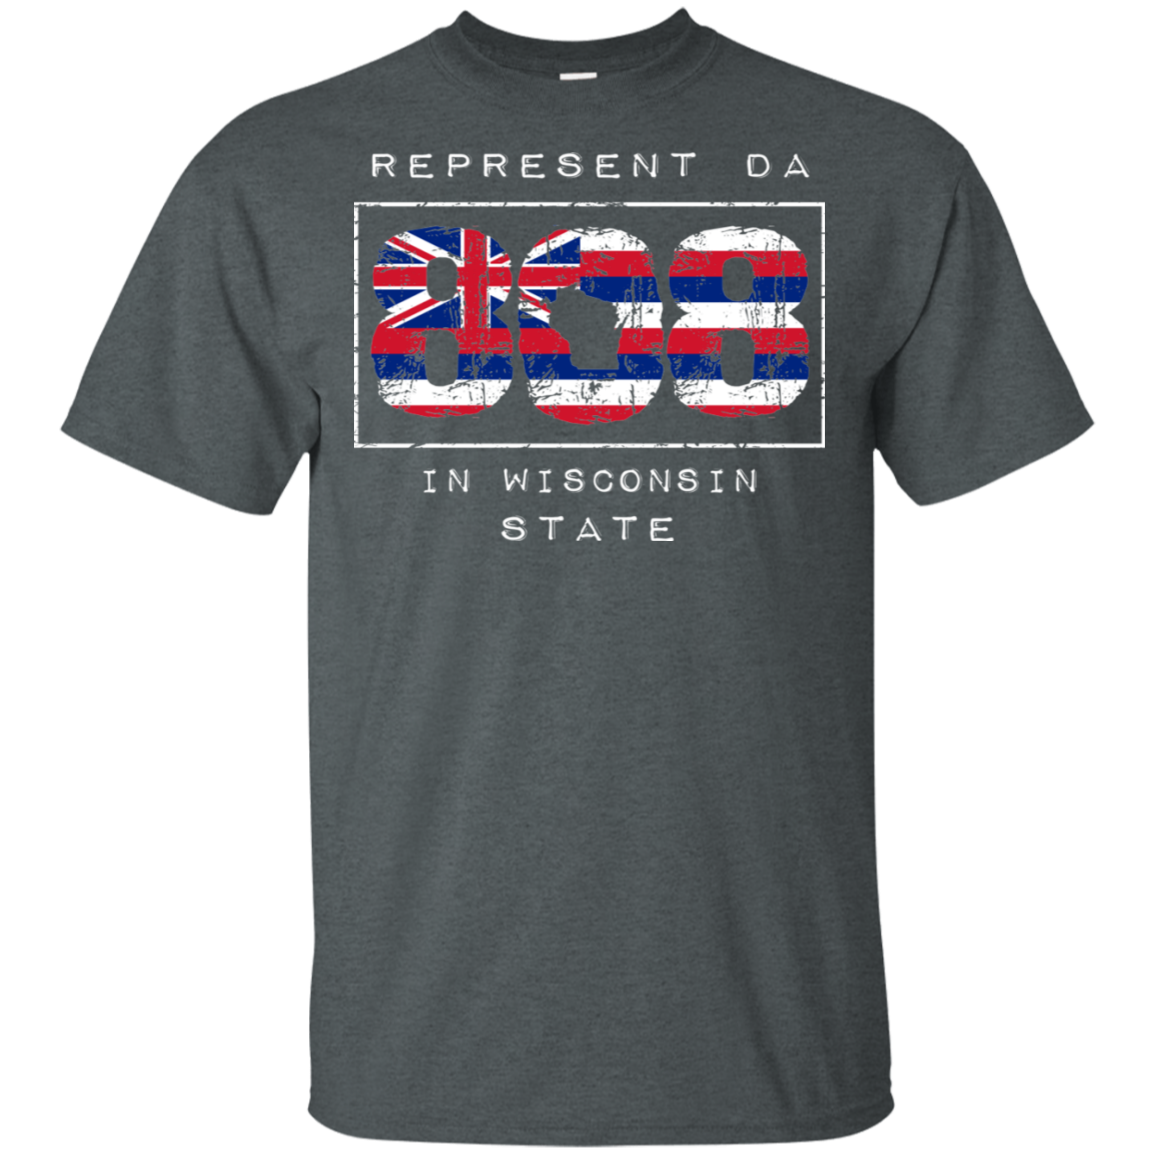 Rep Da 808 In Wisconsin State Ultra Cotton T-Shirt, T-Shirts, Hawaii Nei All Day